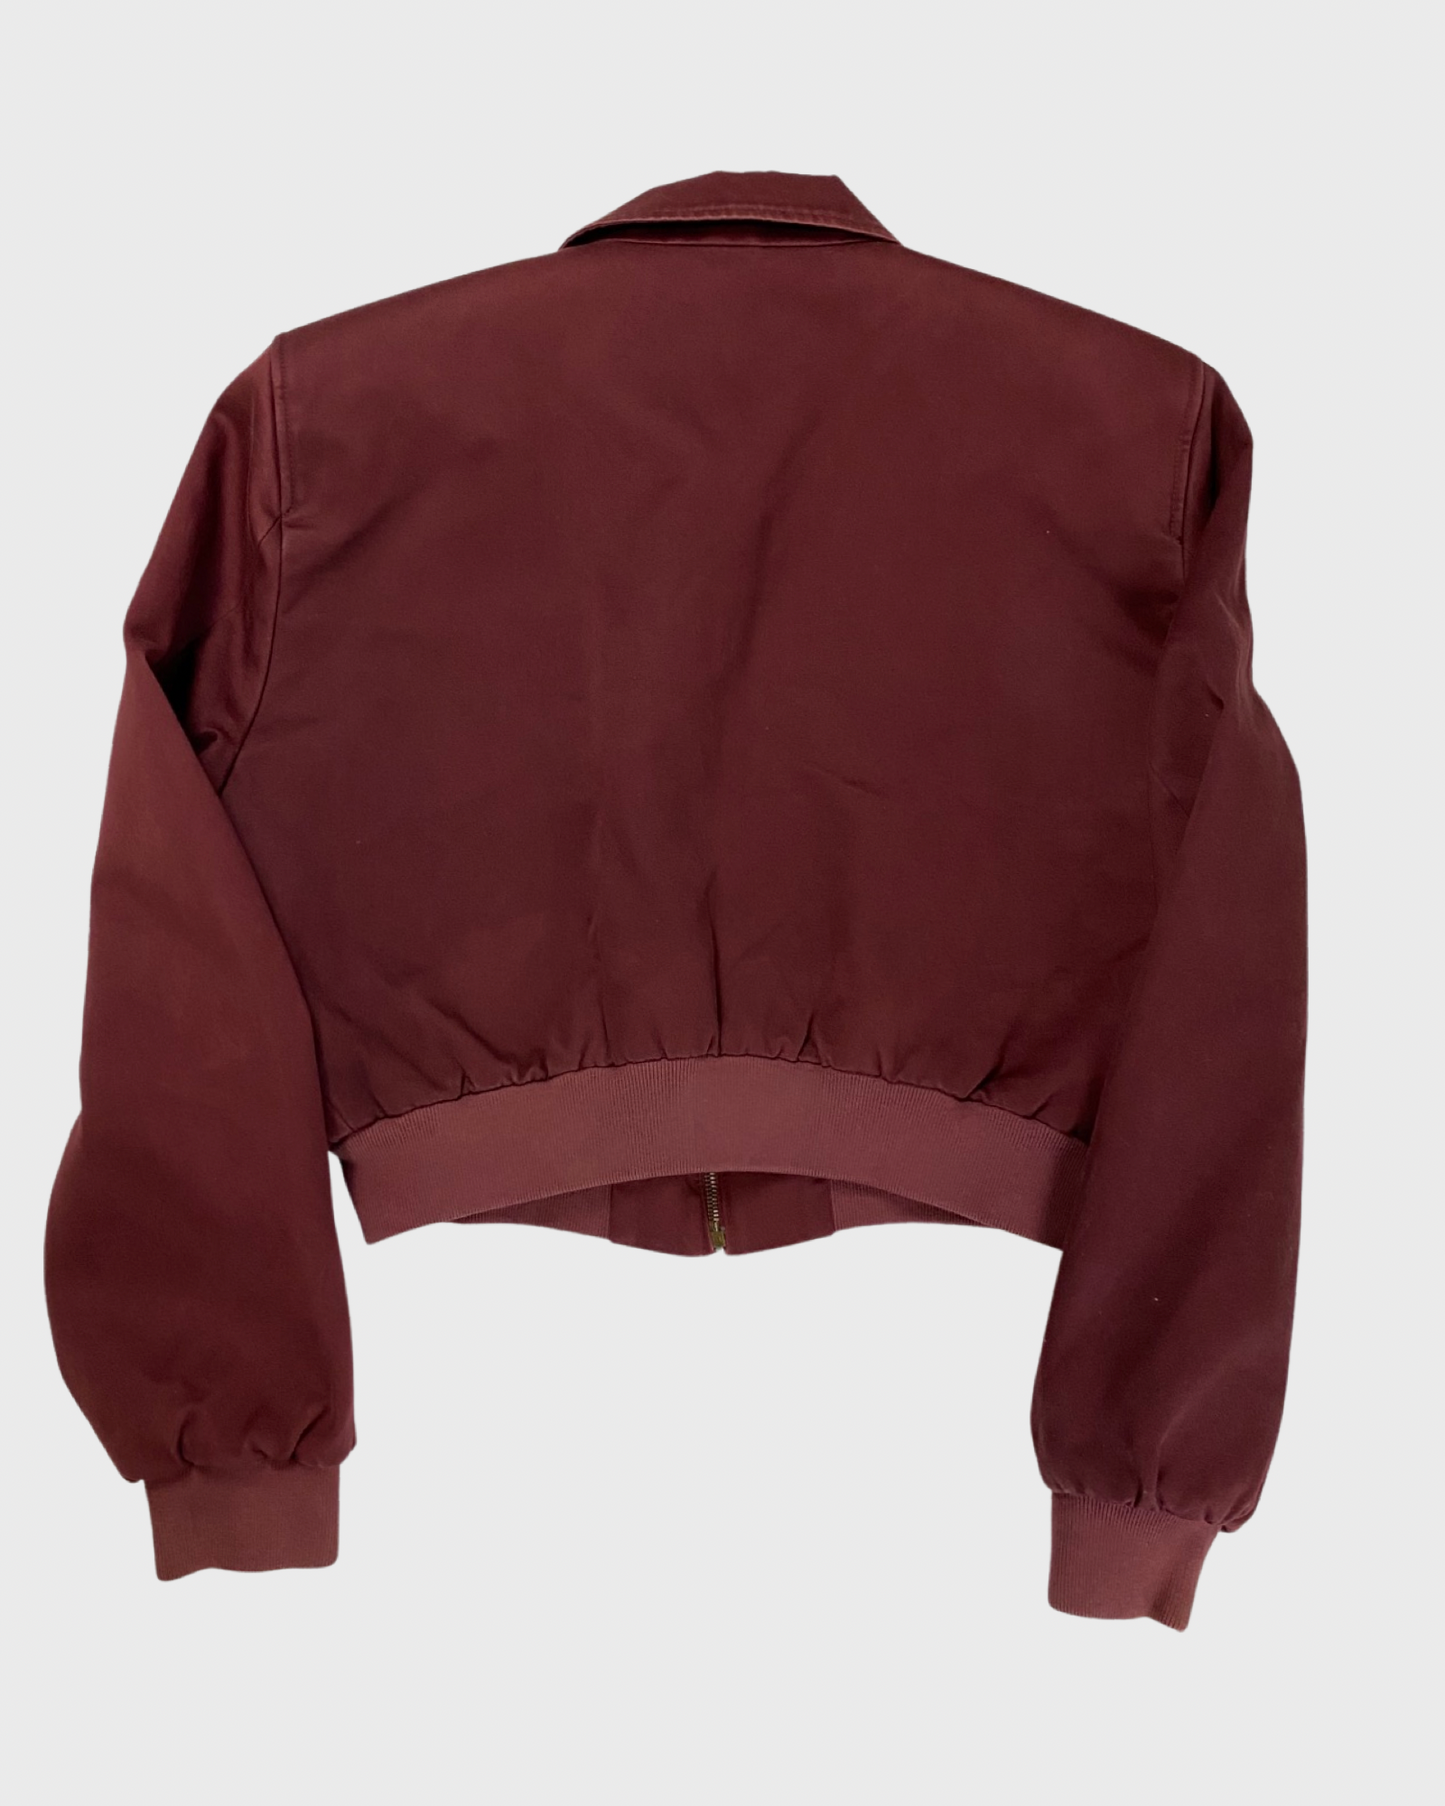 Balenciaga SS17 baracuta cropped boxy jacket with shoulder pads SZ:M